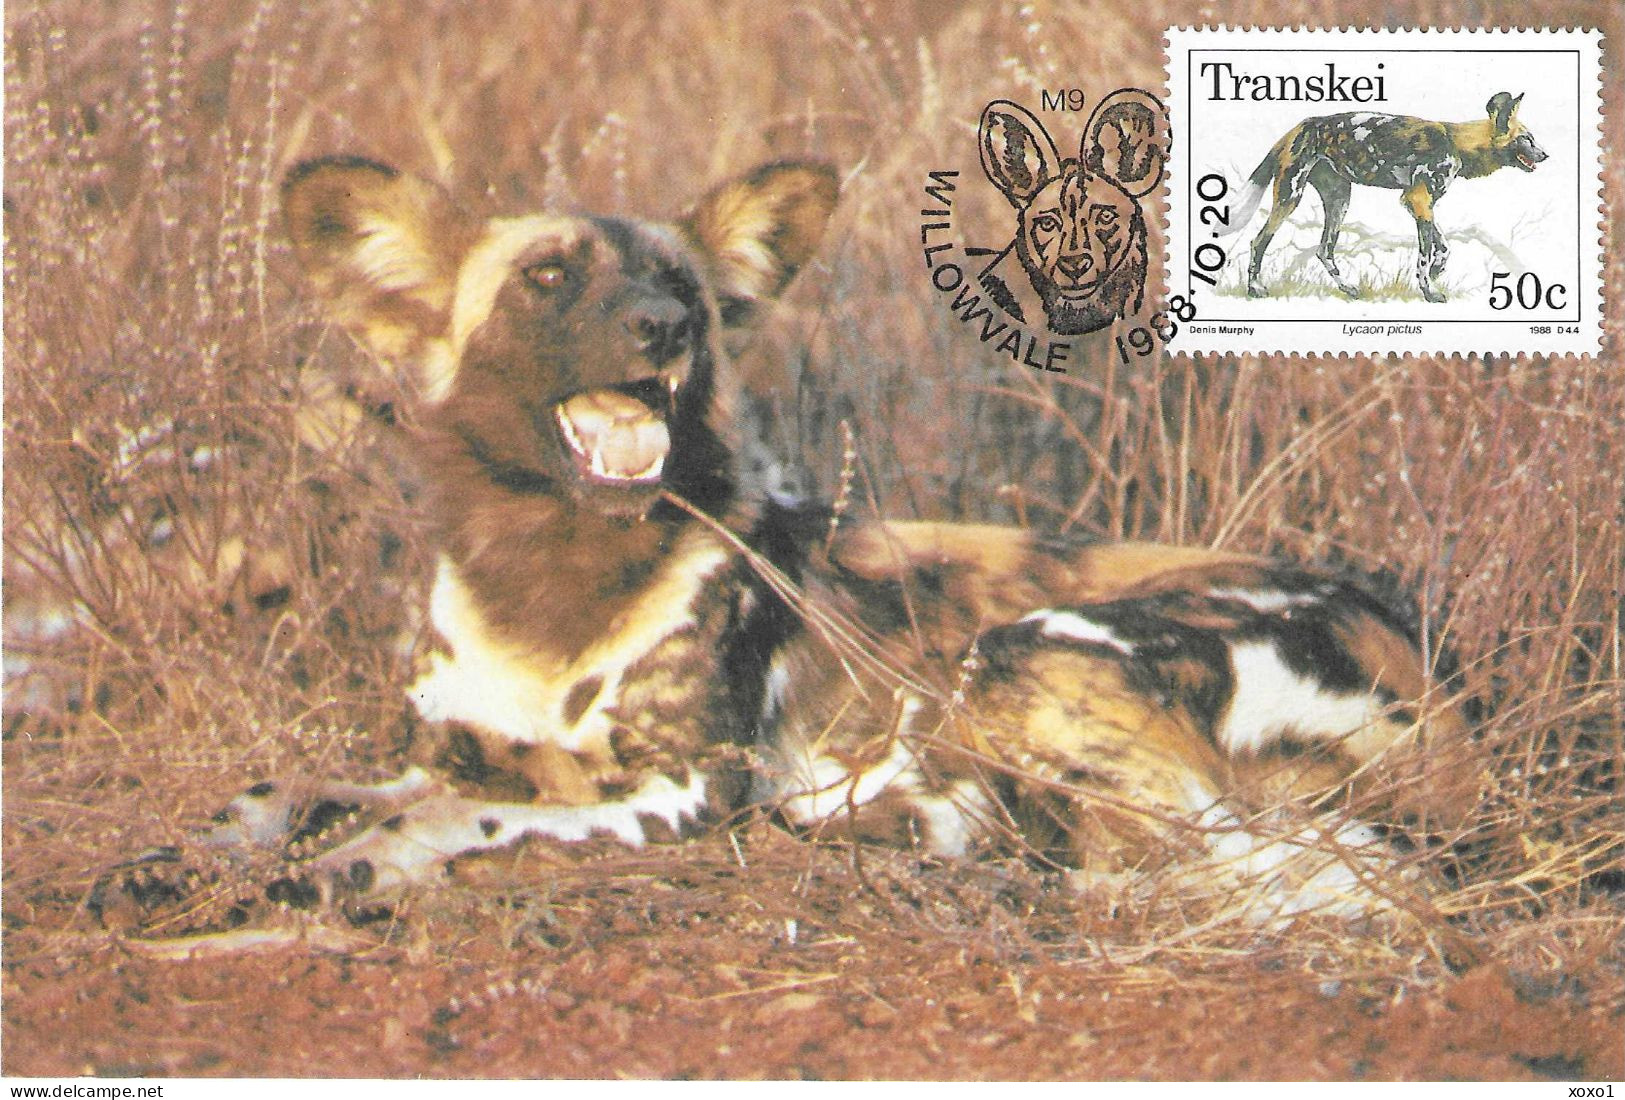 Transkei South Africa 1988 MiNr. 229  Animals  African Wild Dog (Lycaon Pictus) MC 1.80 € - Honden